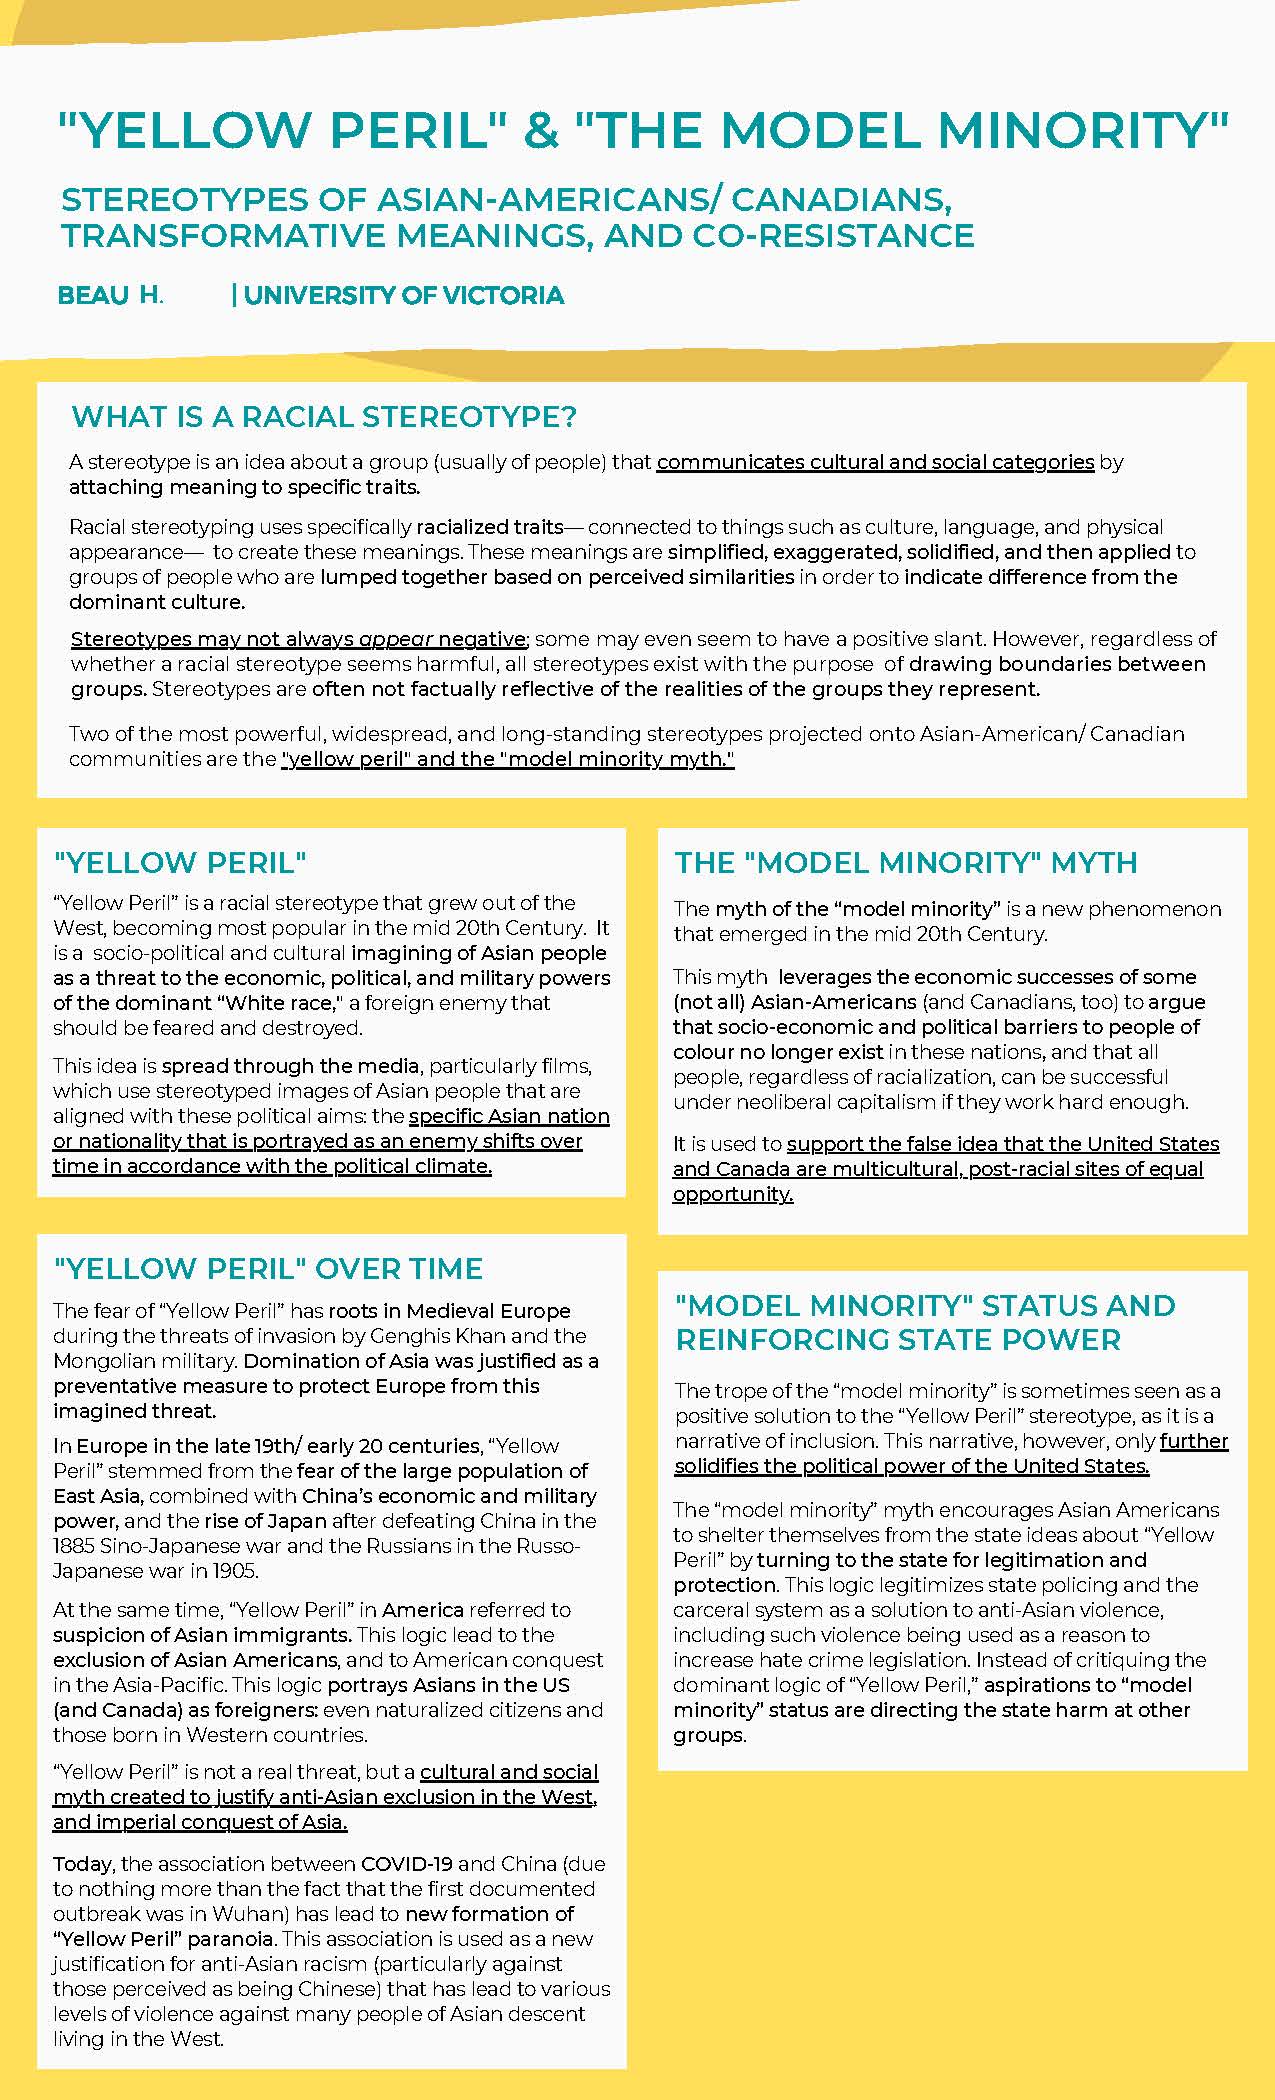 Yellow-Peril-&-The-Model.-B.H..pdf_Page_1.jpg